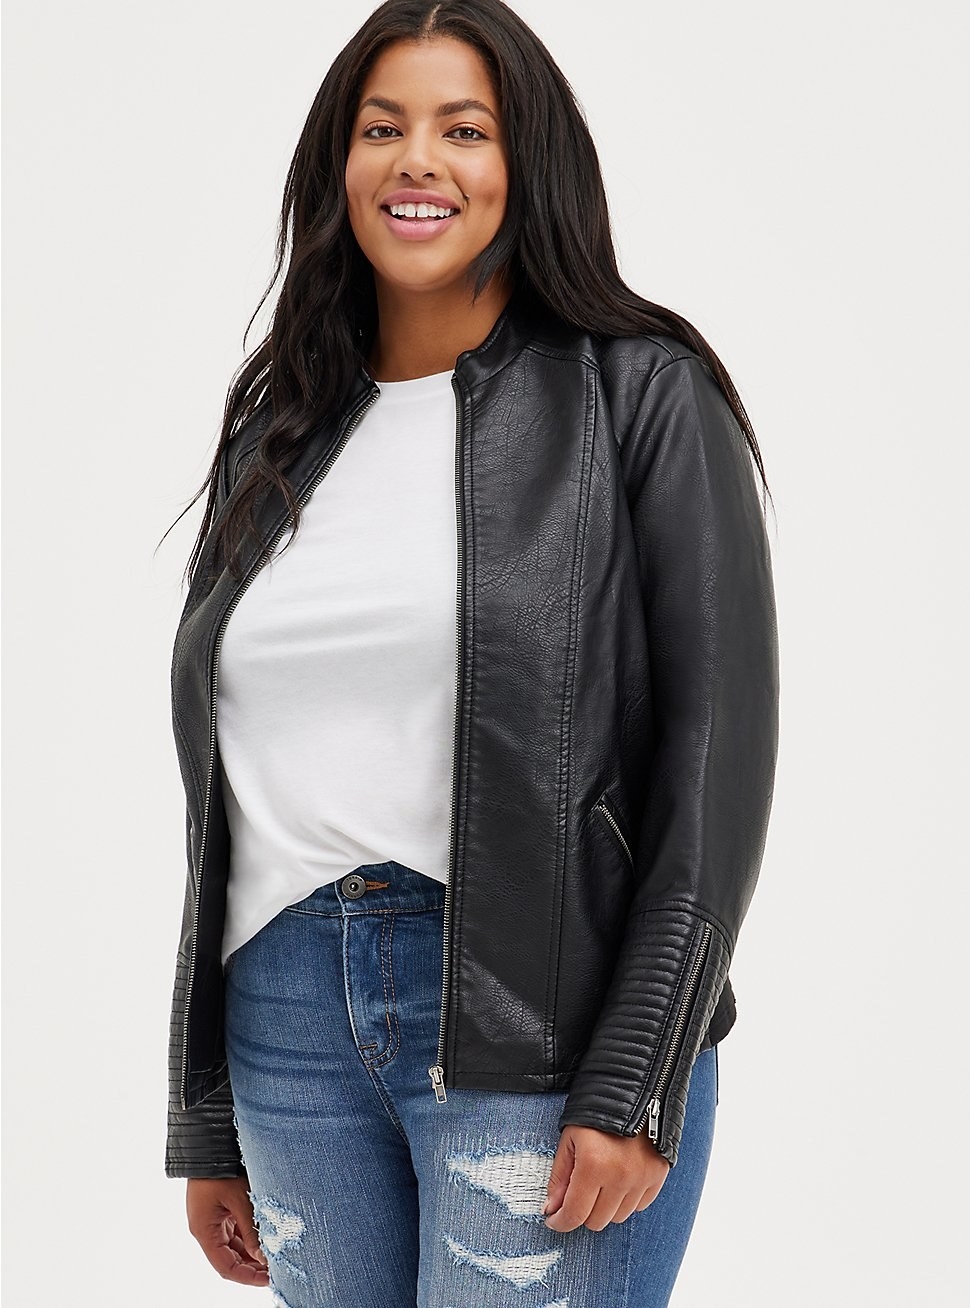 model wearing the faux leather jacket in black